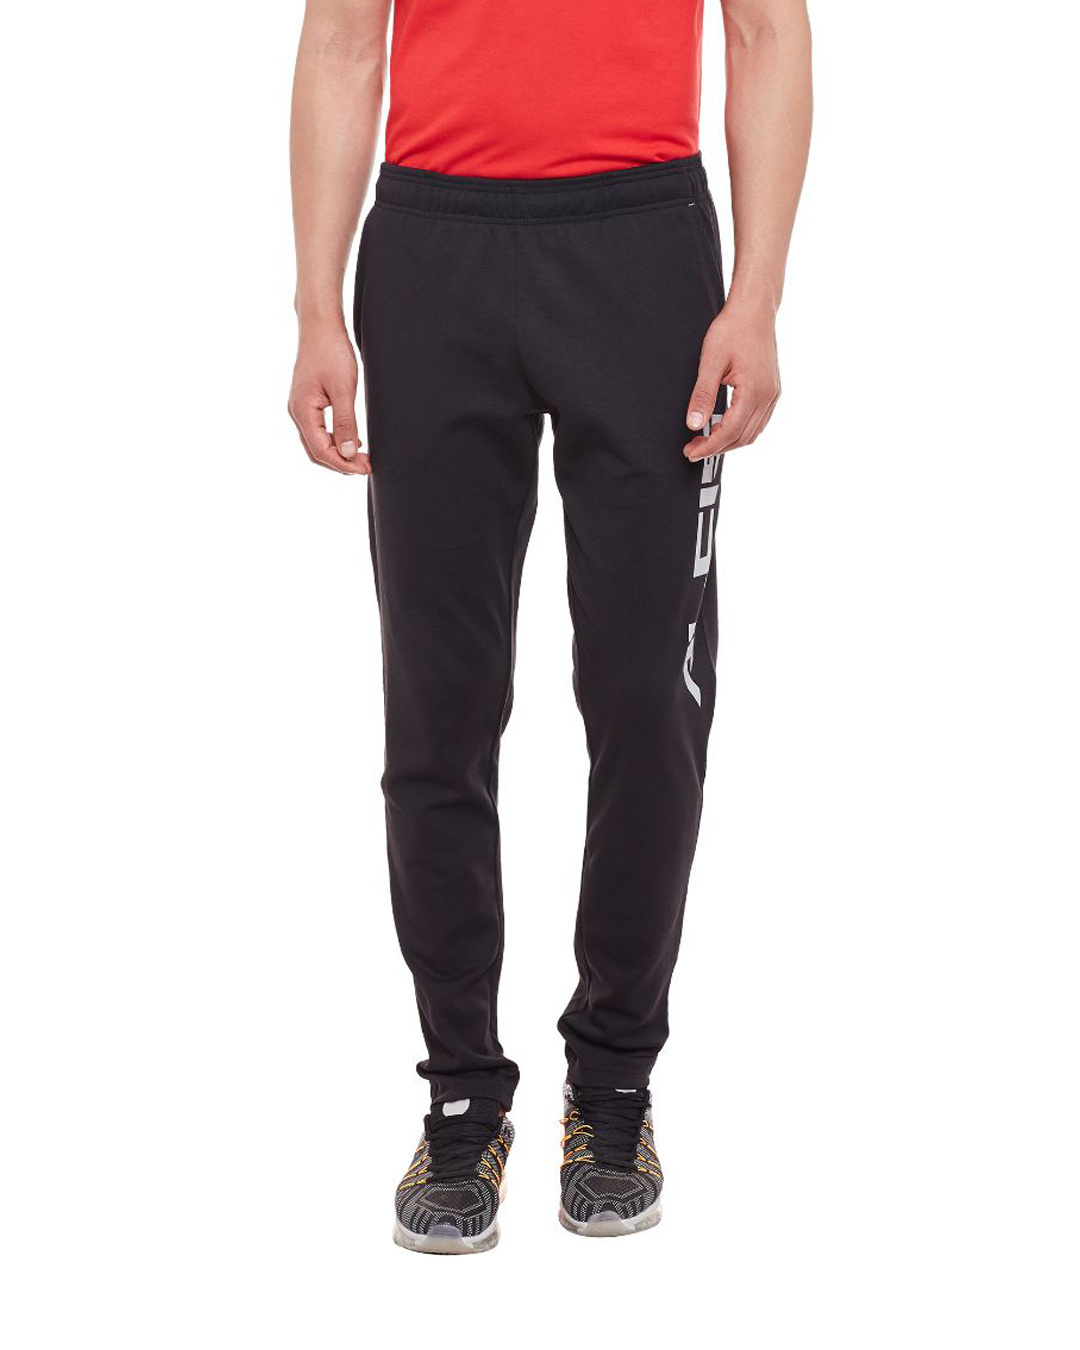 Buy Men's Black Core Performance Slim Fit Track Pants Online at Bewakoof